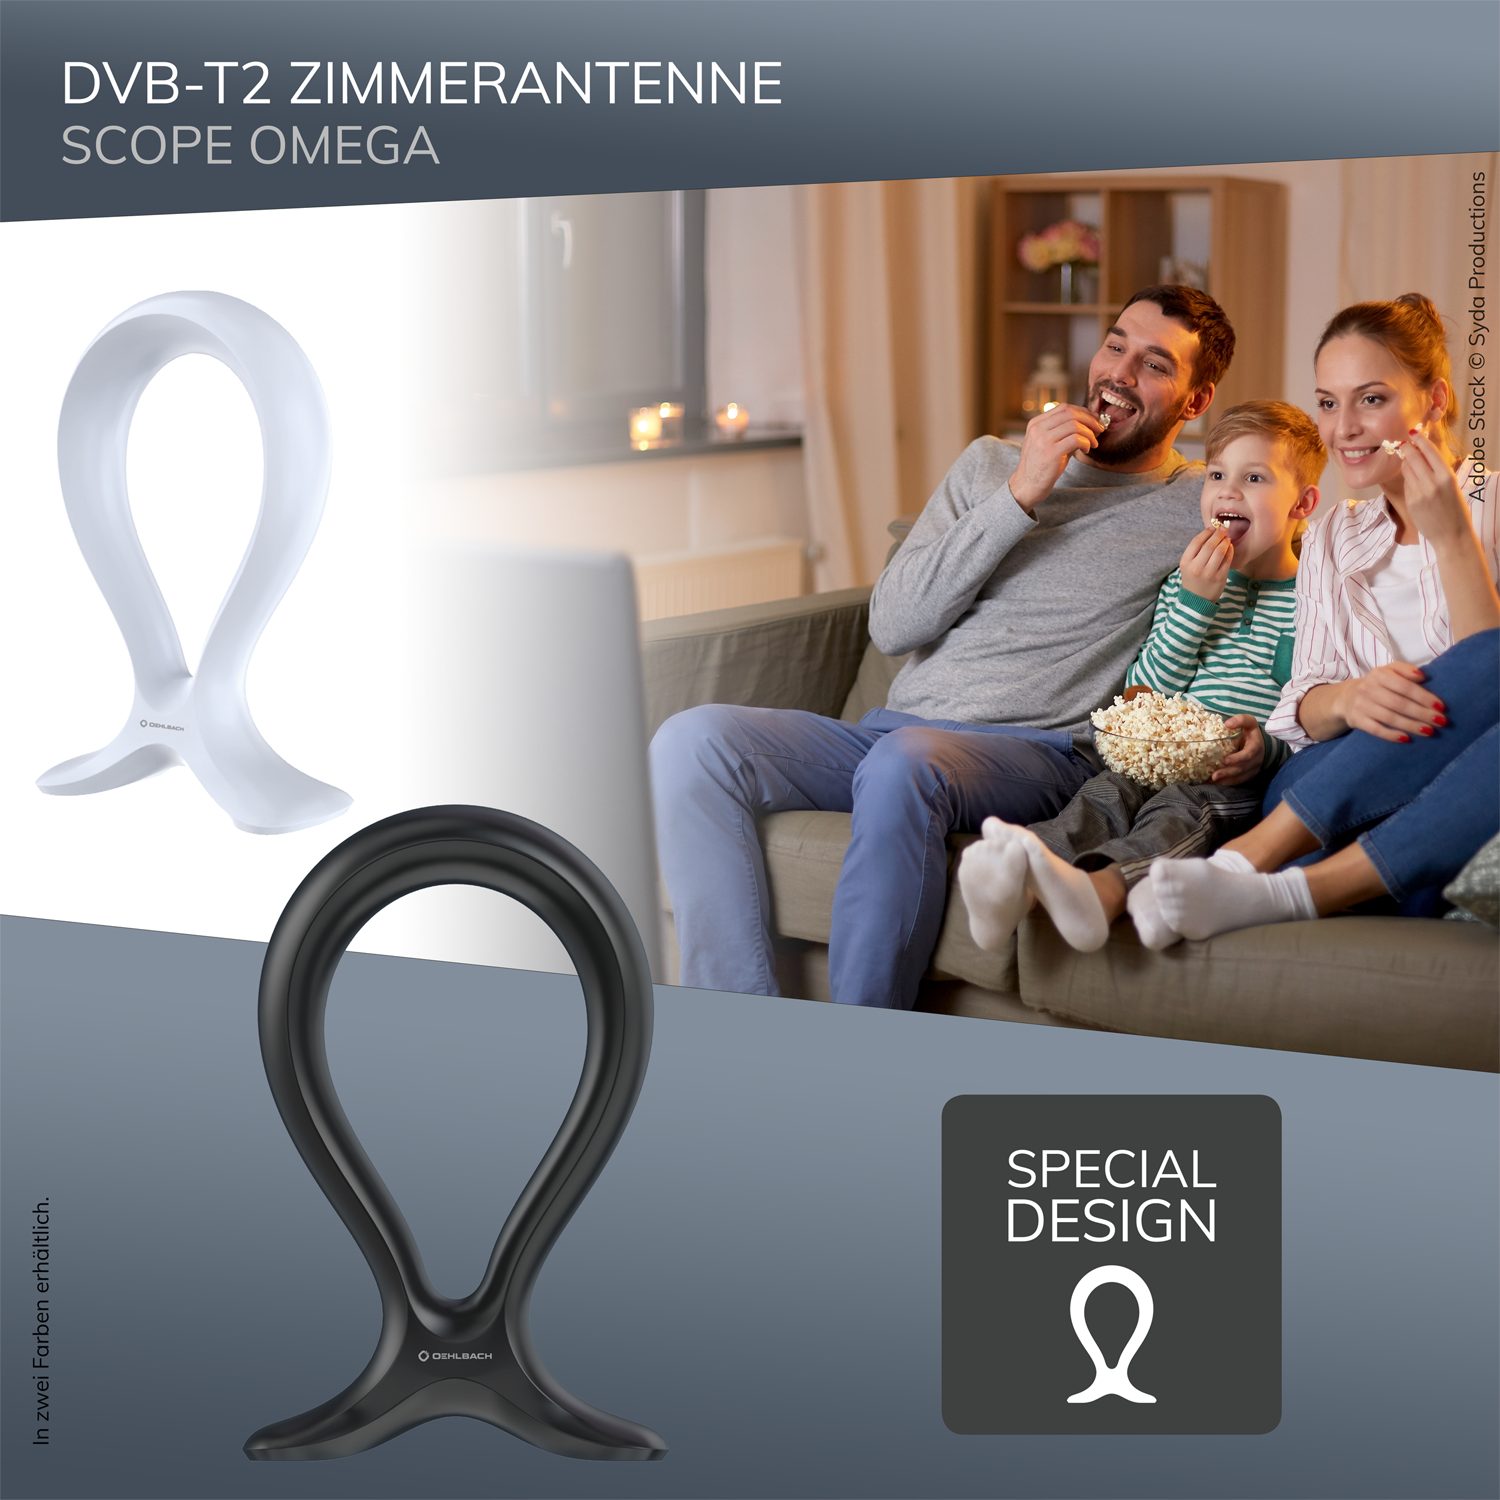 Oehlbach Scope Omega Zimmerantenne (DVB-T2) DVB-T2 Weiß für Innenantenne